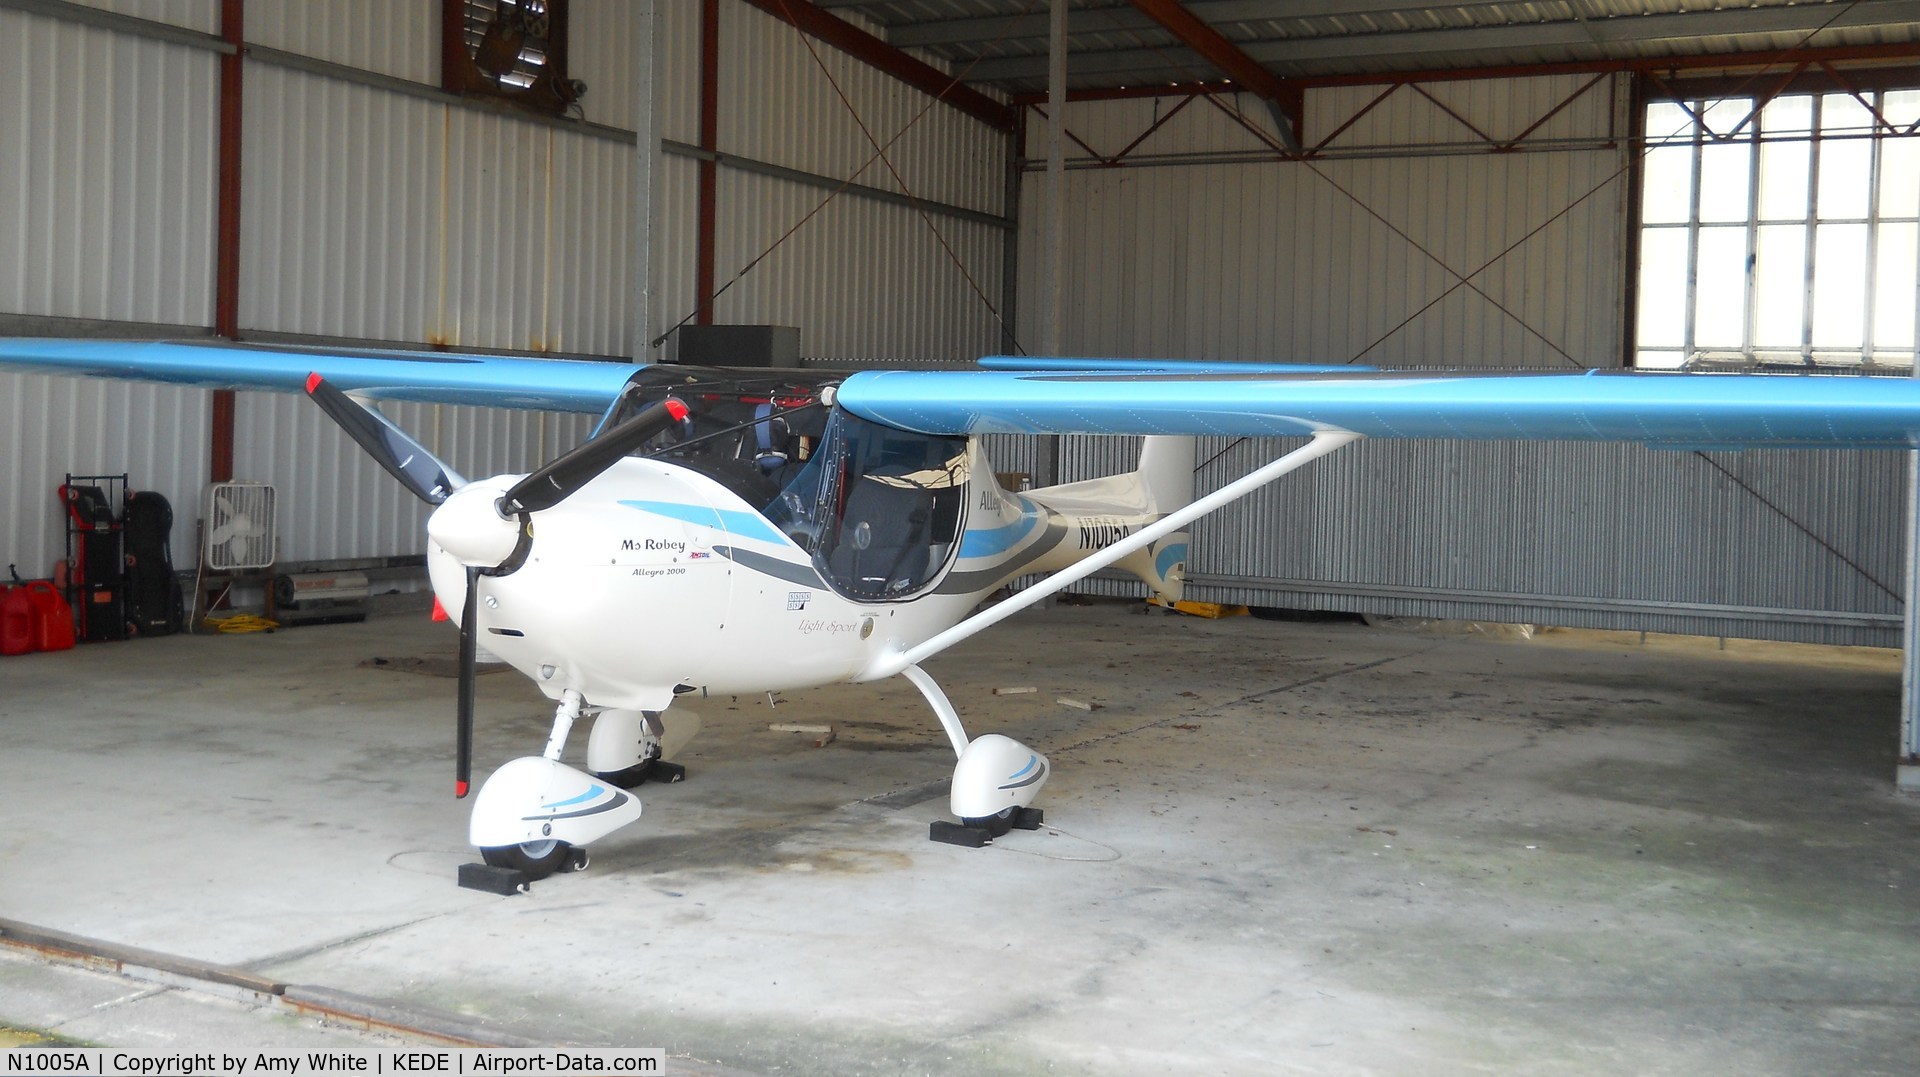 N1005A, 2005 Fantasy Air Allegro 2000 C/N 05-039, In the hangar.